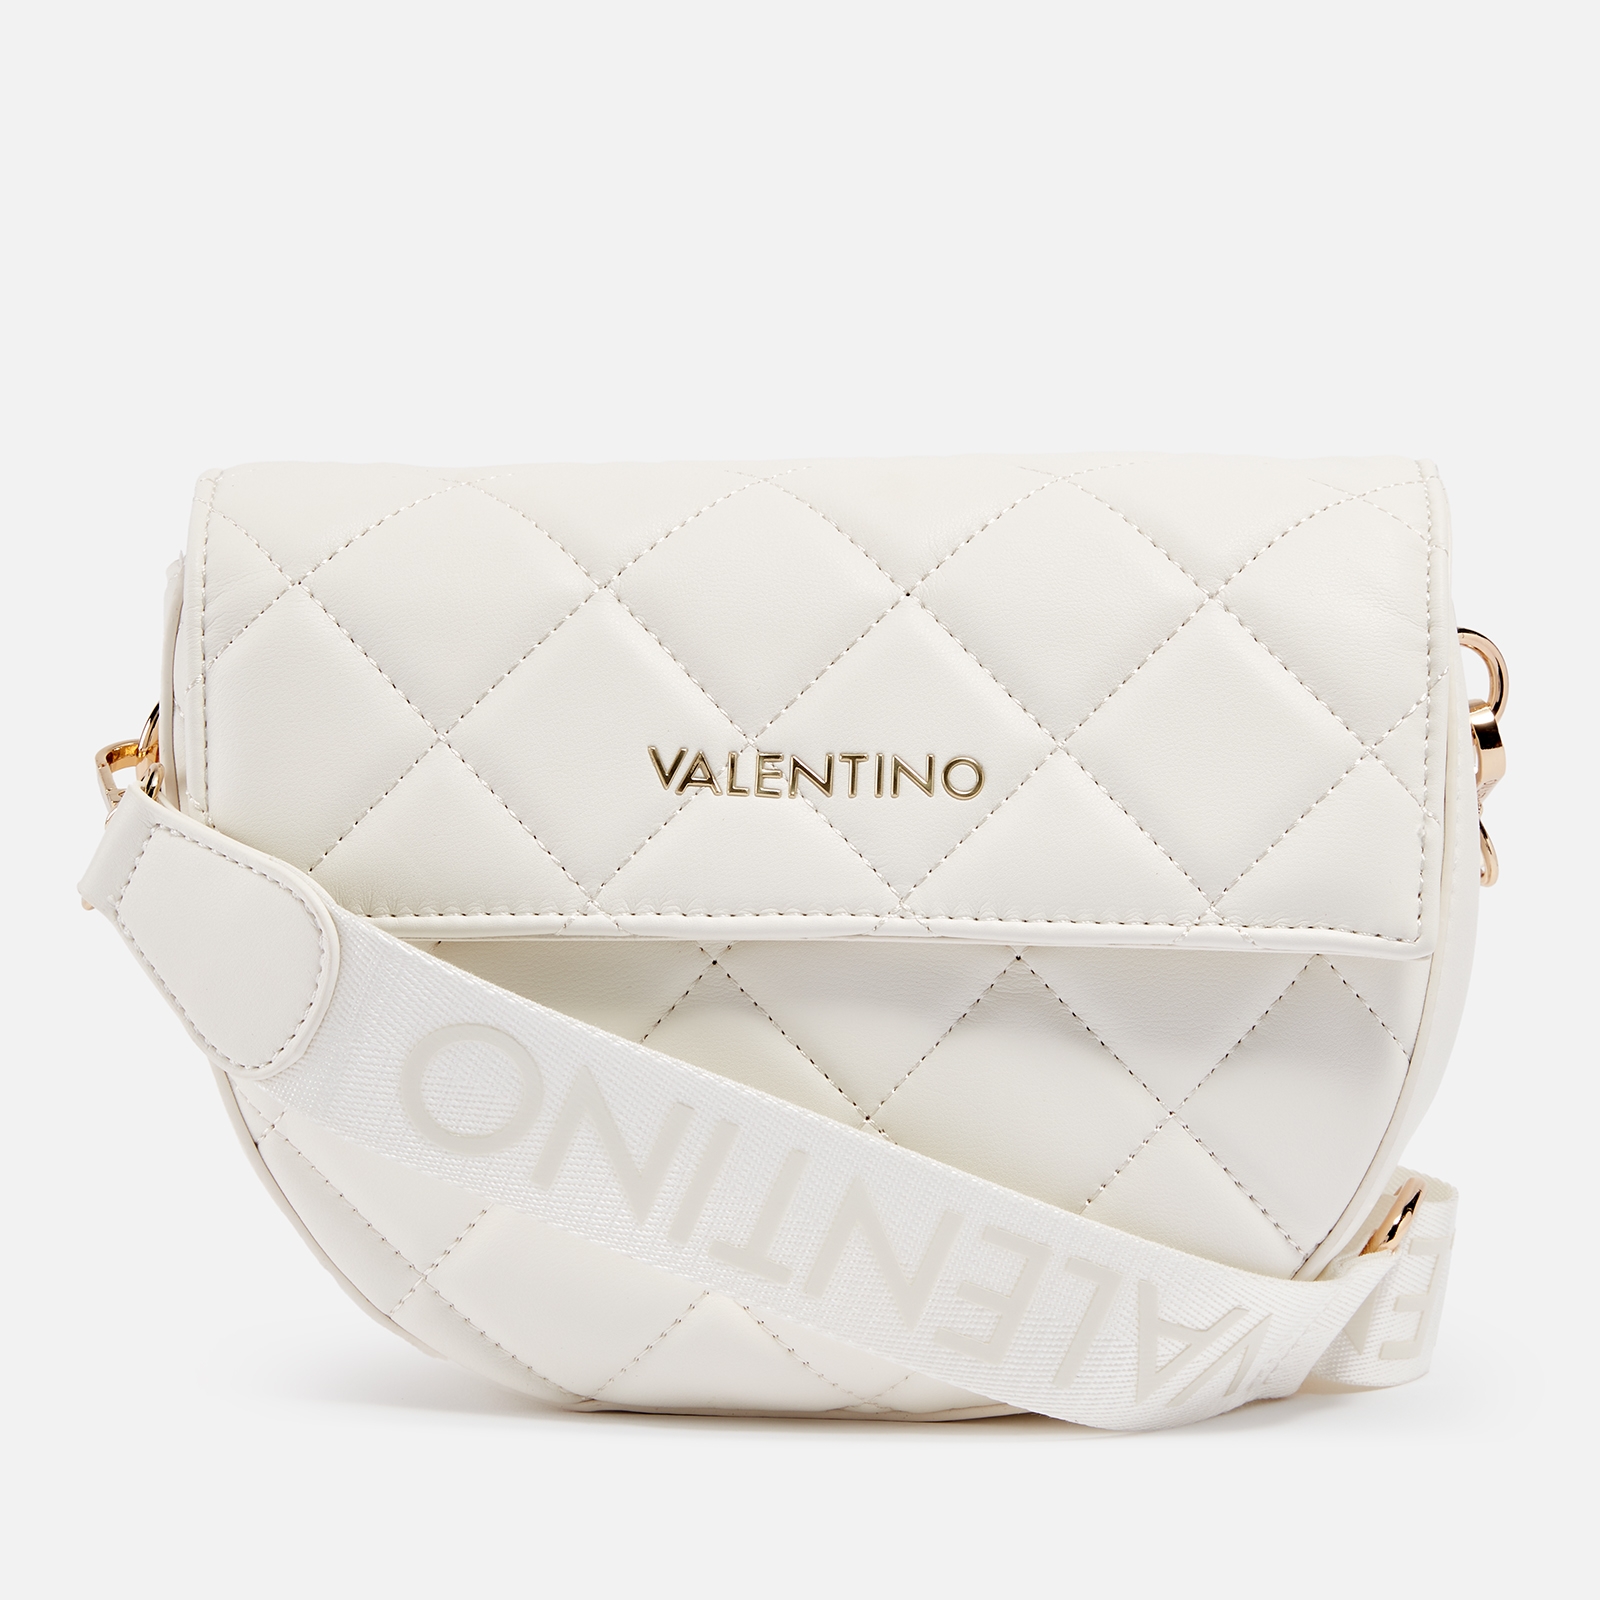 Valentino Women's Bigs Flap Bag - Bianco